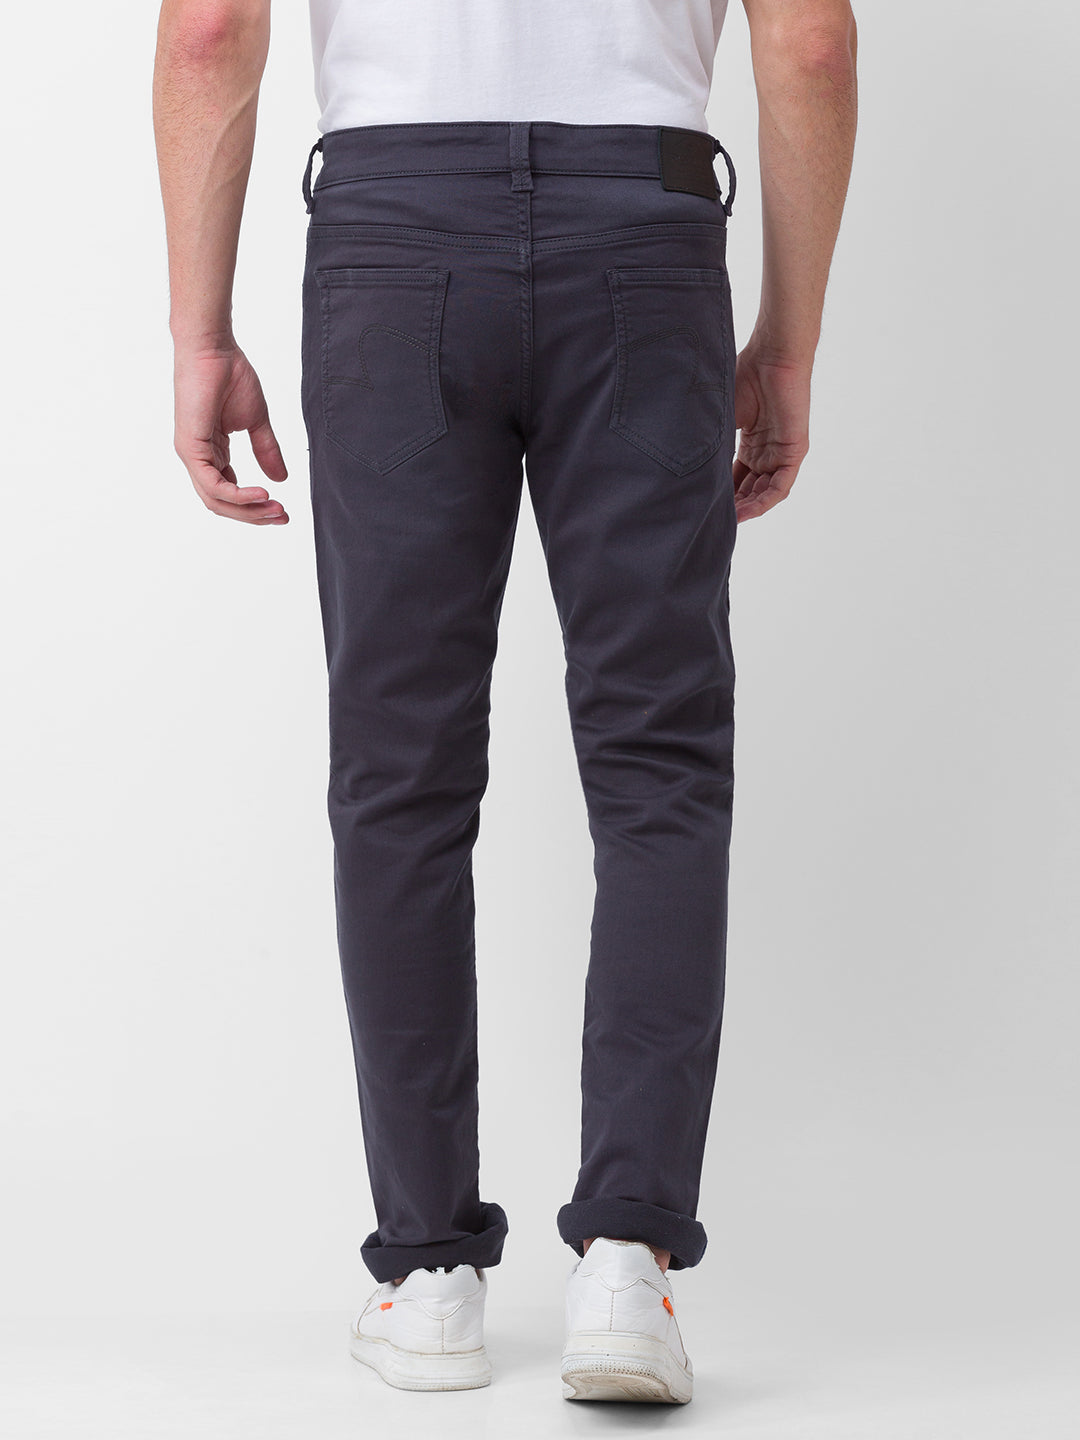 Spykar Dark Grey Cotton Regular Fit Narrow Length Jeans For Men (Rover)